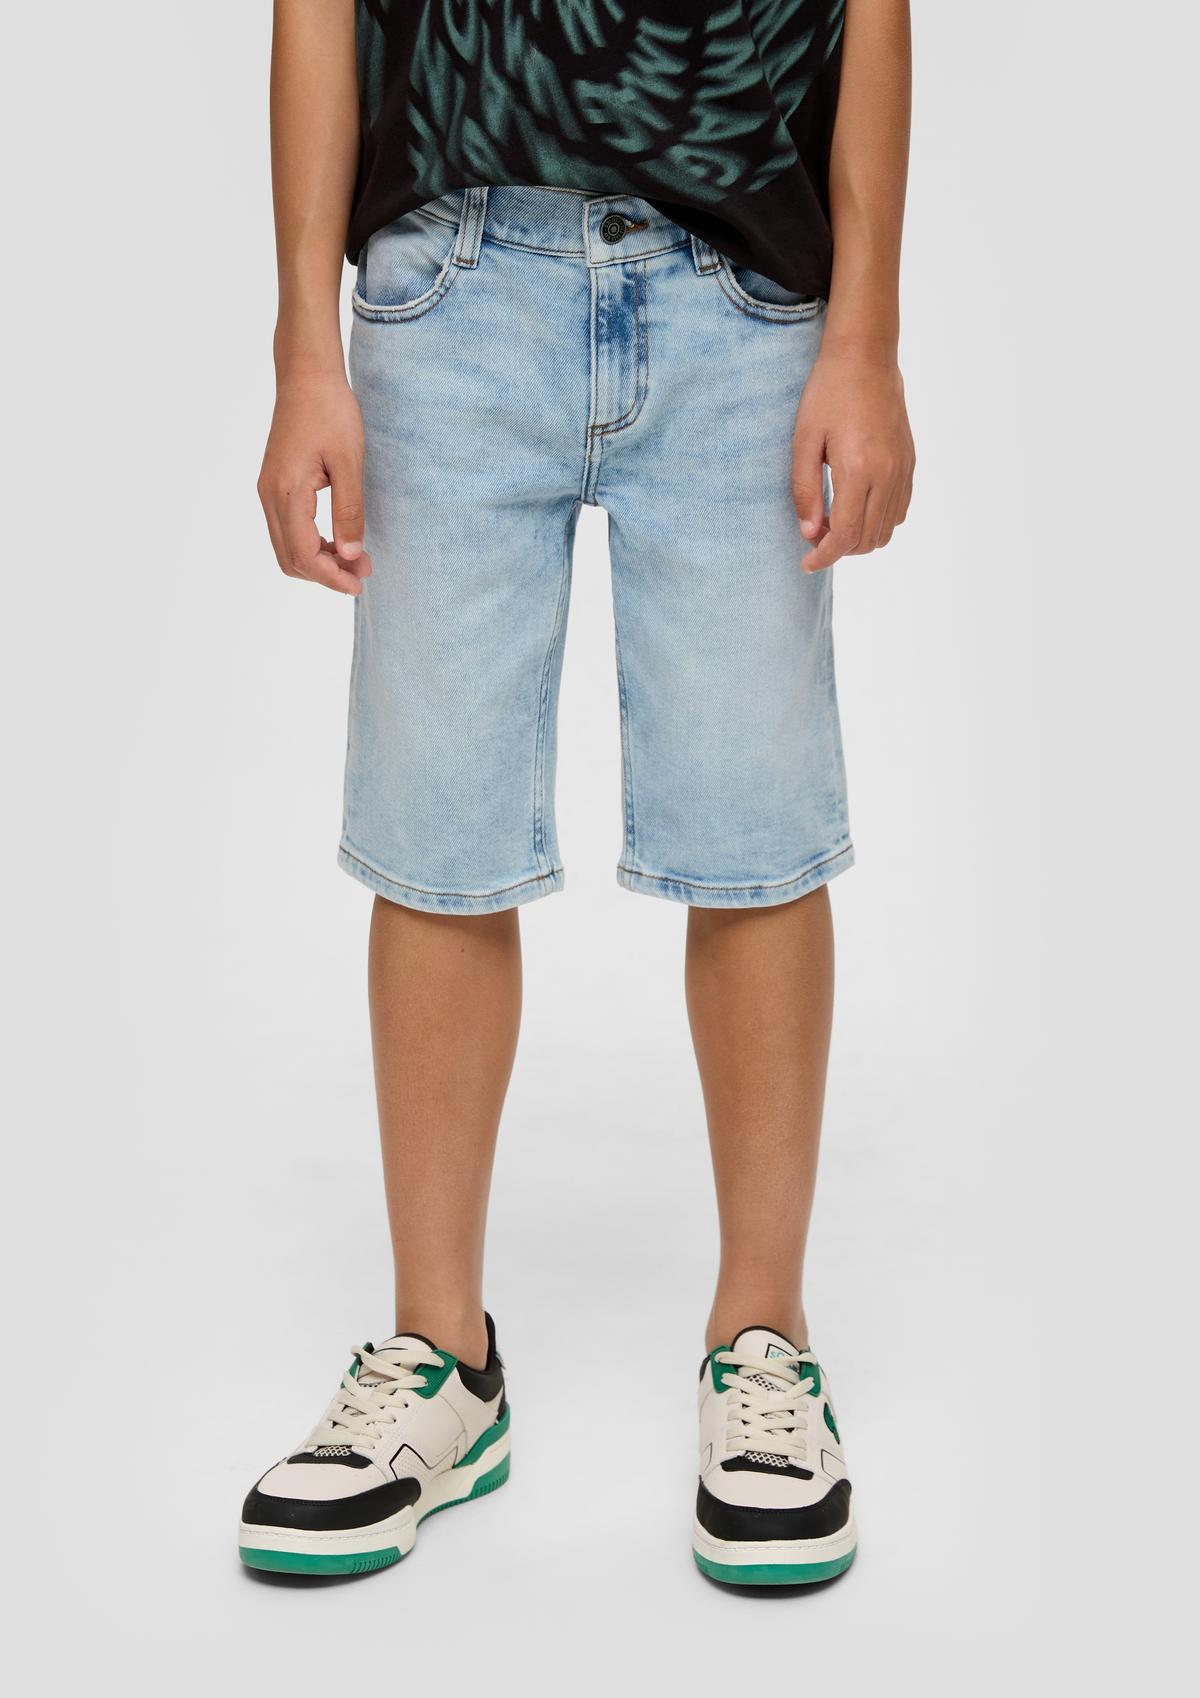 Bermuda-jeans Seattle / regular fit / mid rise / slim leg